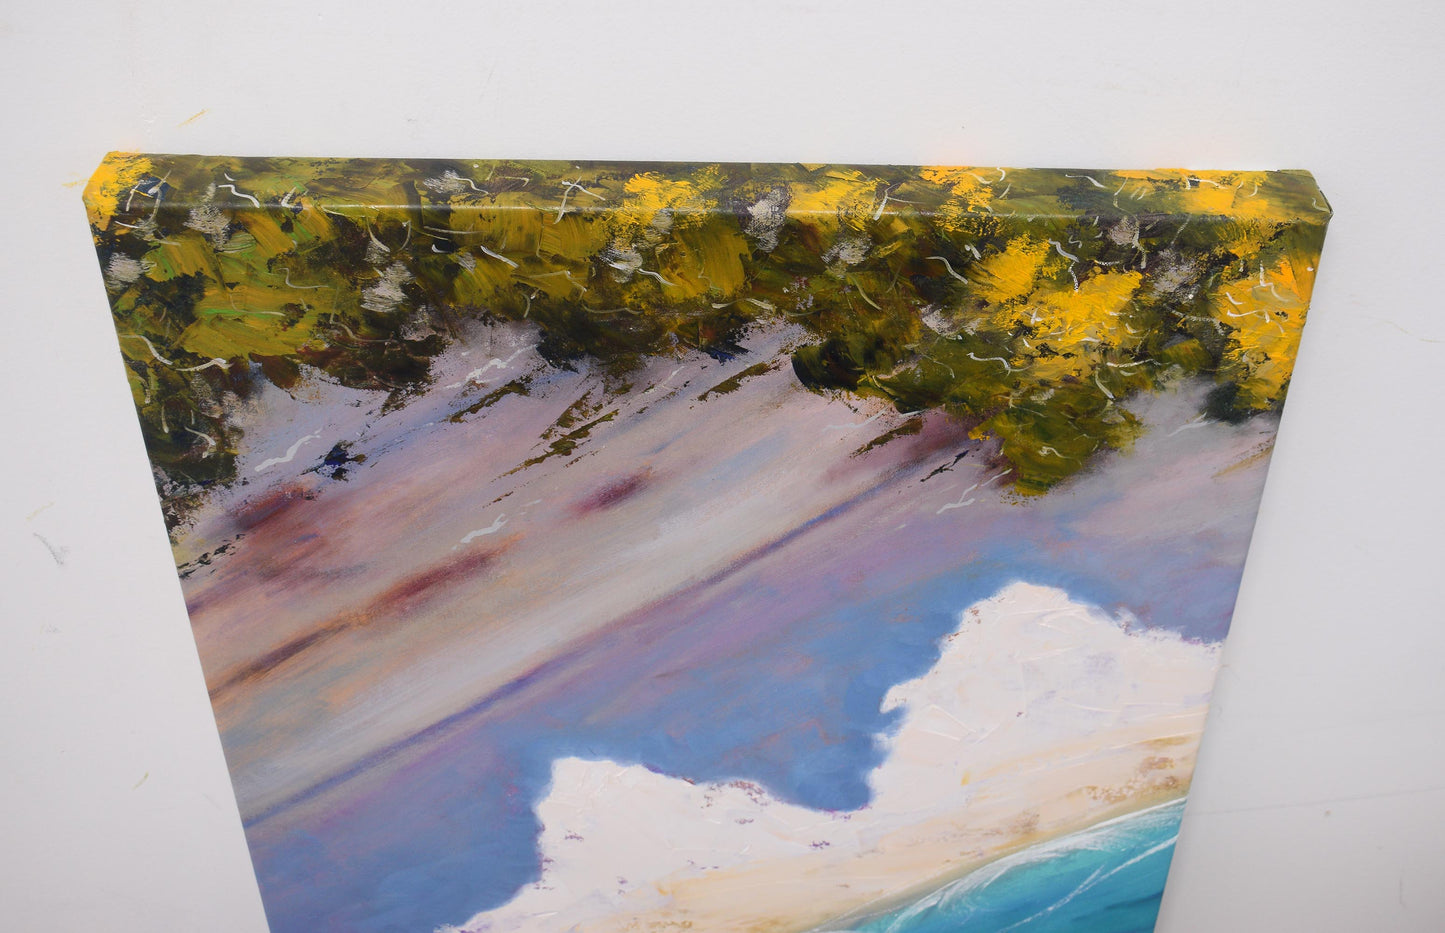 Drone Beach Art oil painting by Graham Gercken